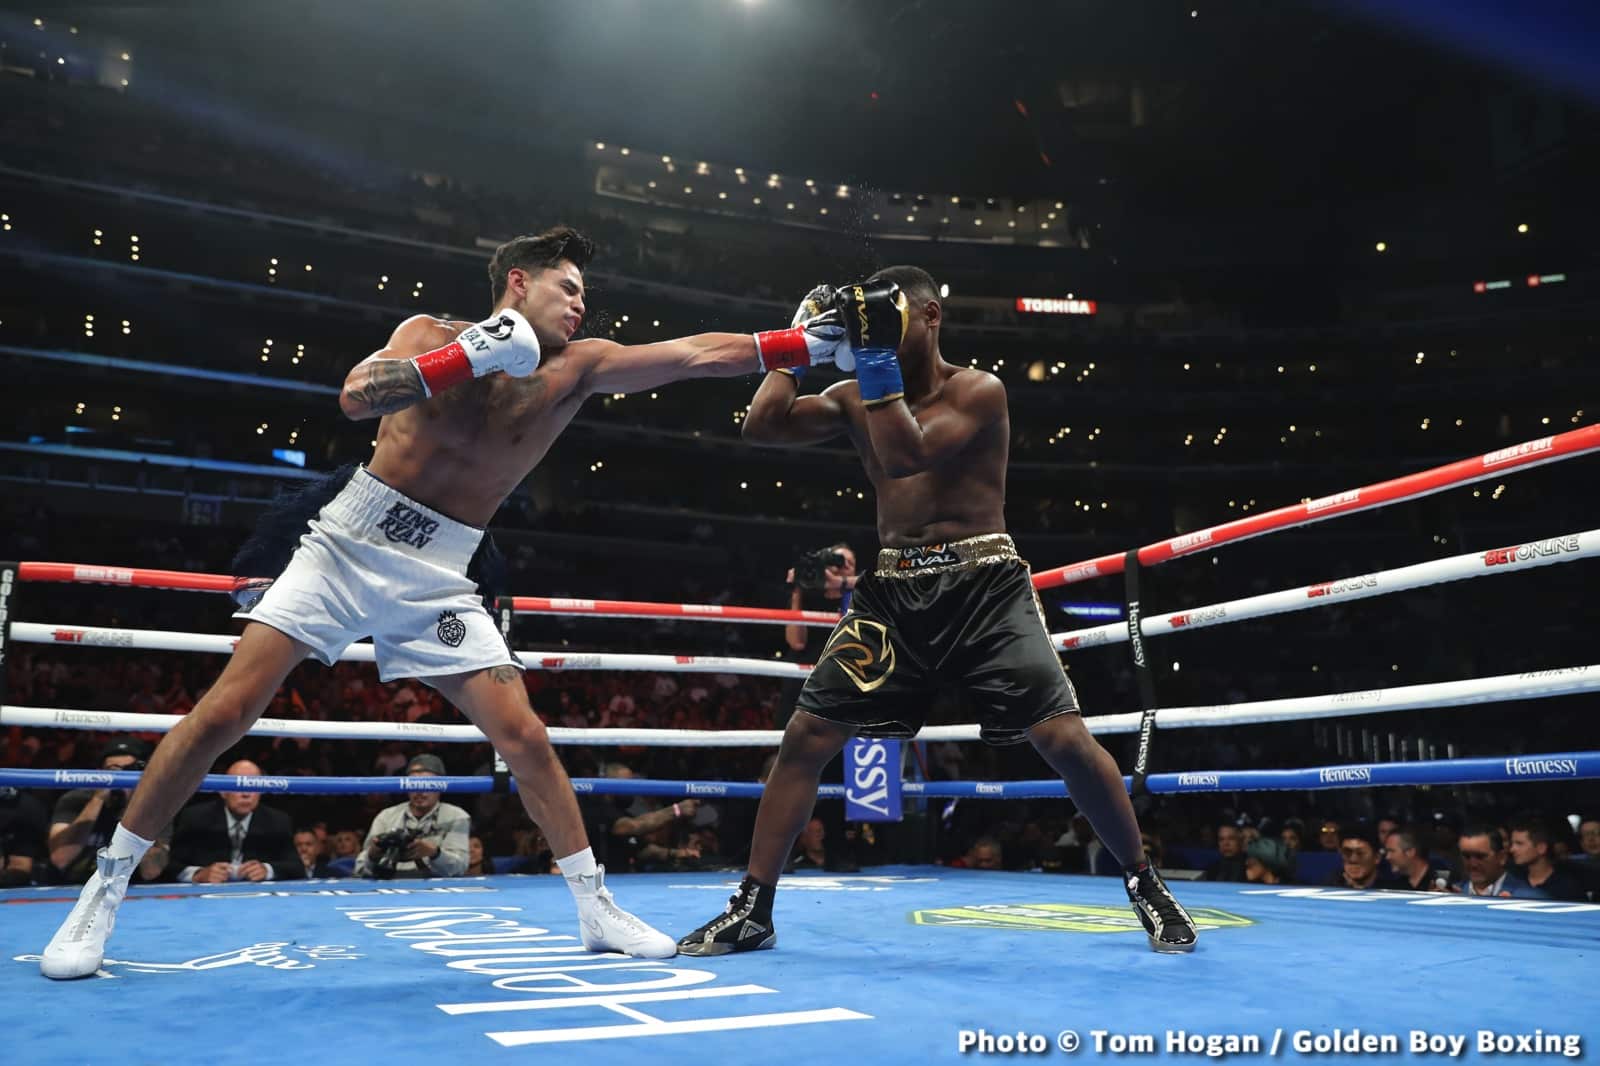 Garcia destroys Fortuna in 6th round KO - Boxing Results